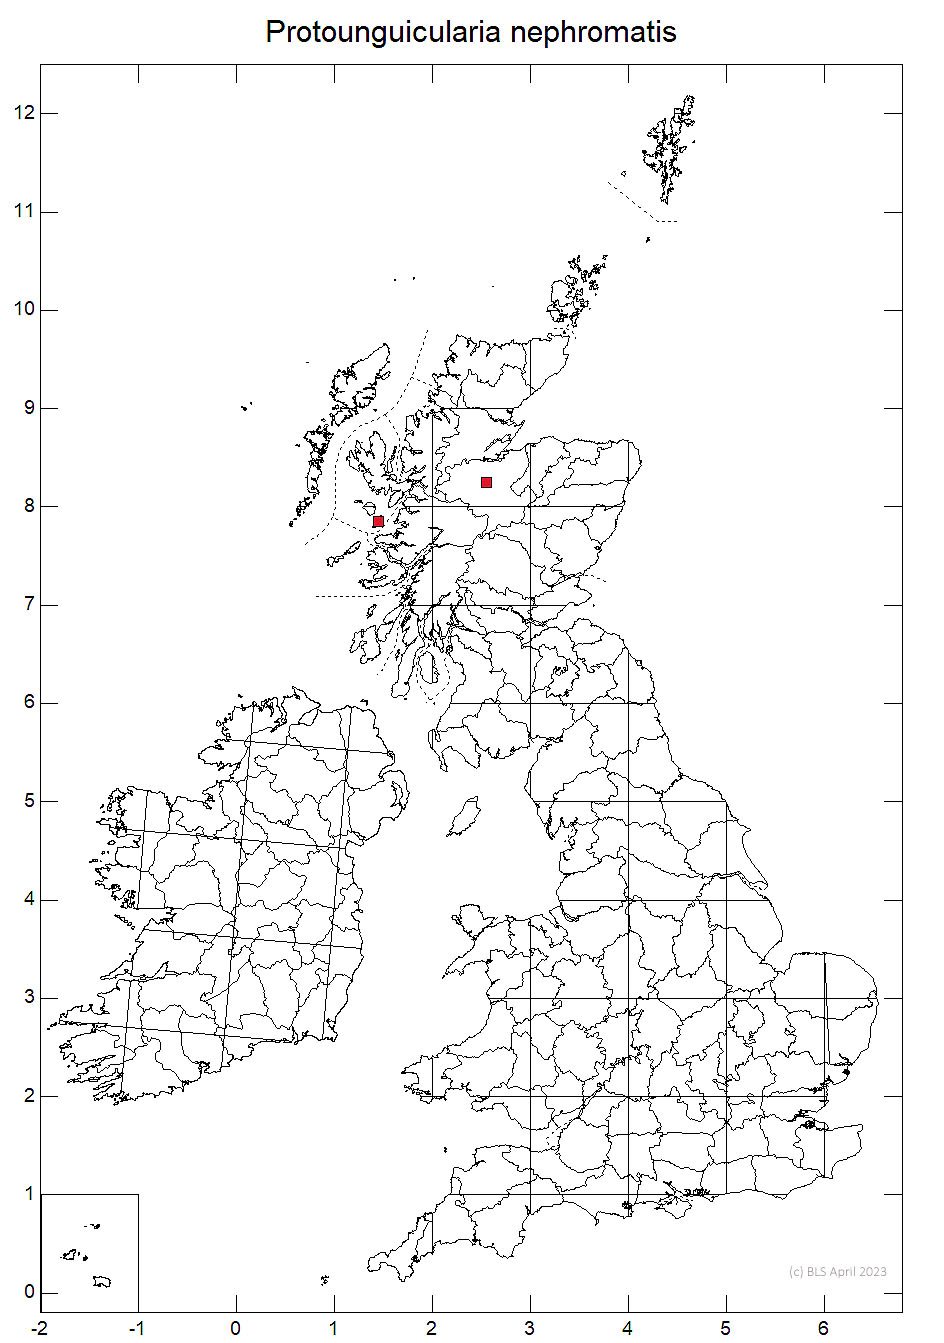 Protounguicularia nephromatis 10km sq distribution map